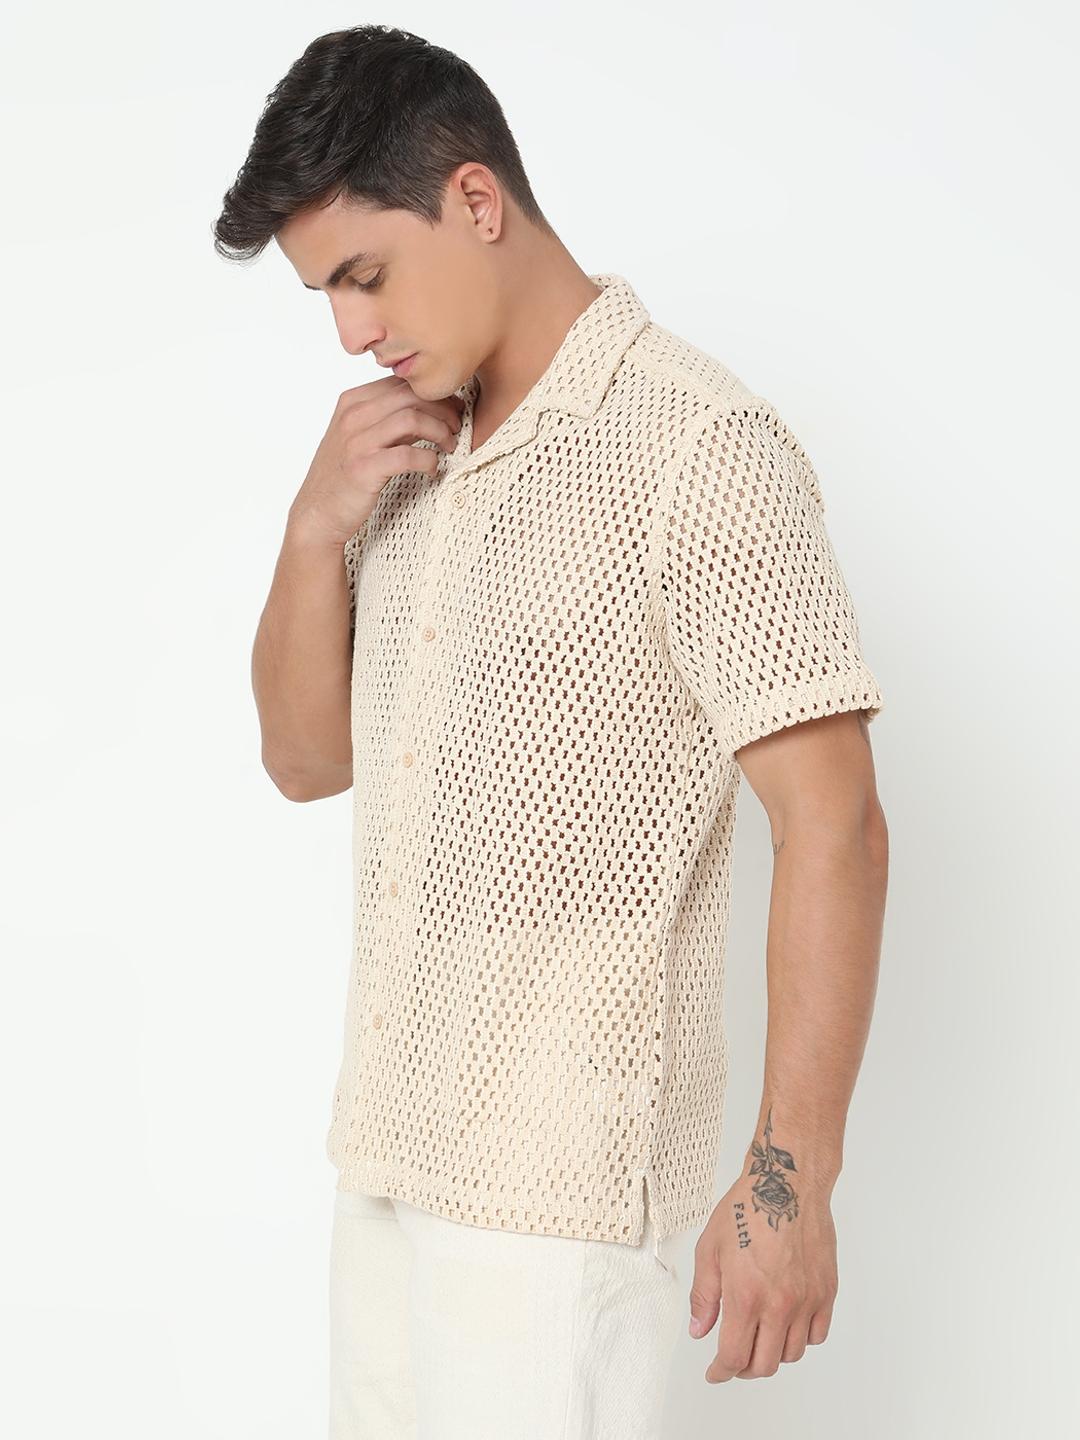 Regular Fit Solid Short Sleeve Shirt with Resort Collar